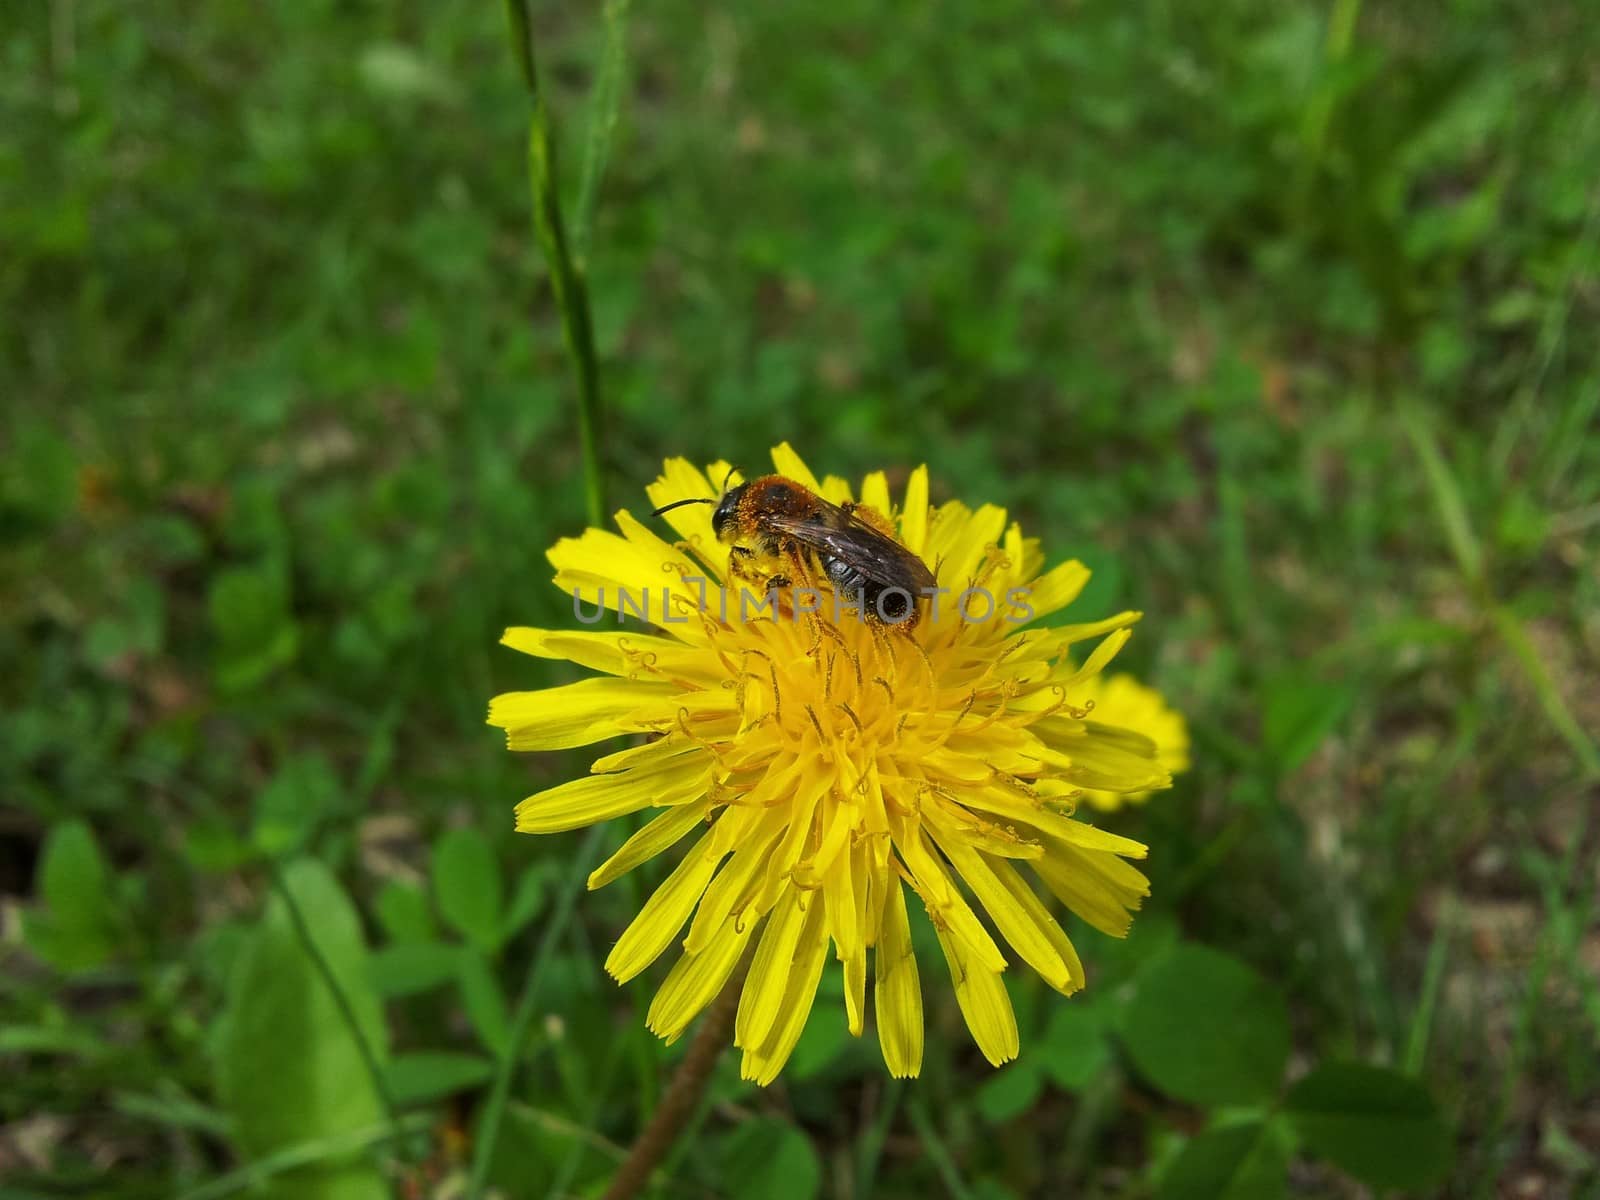 Bee gathering pollen on a yellow dandelion flower towards green grass